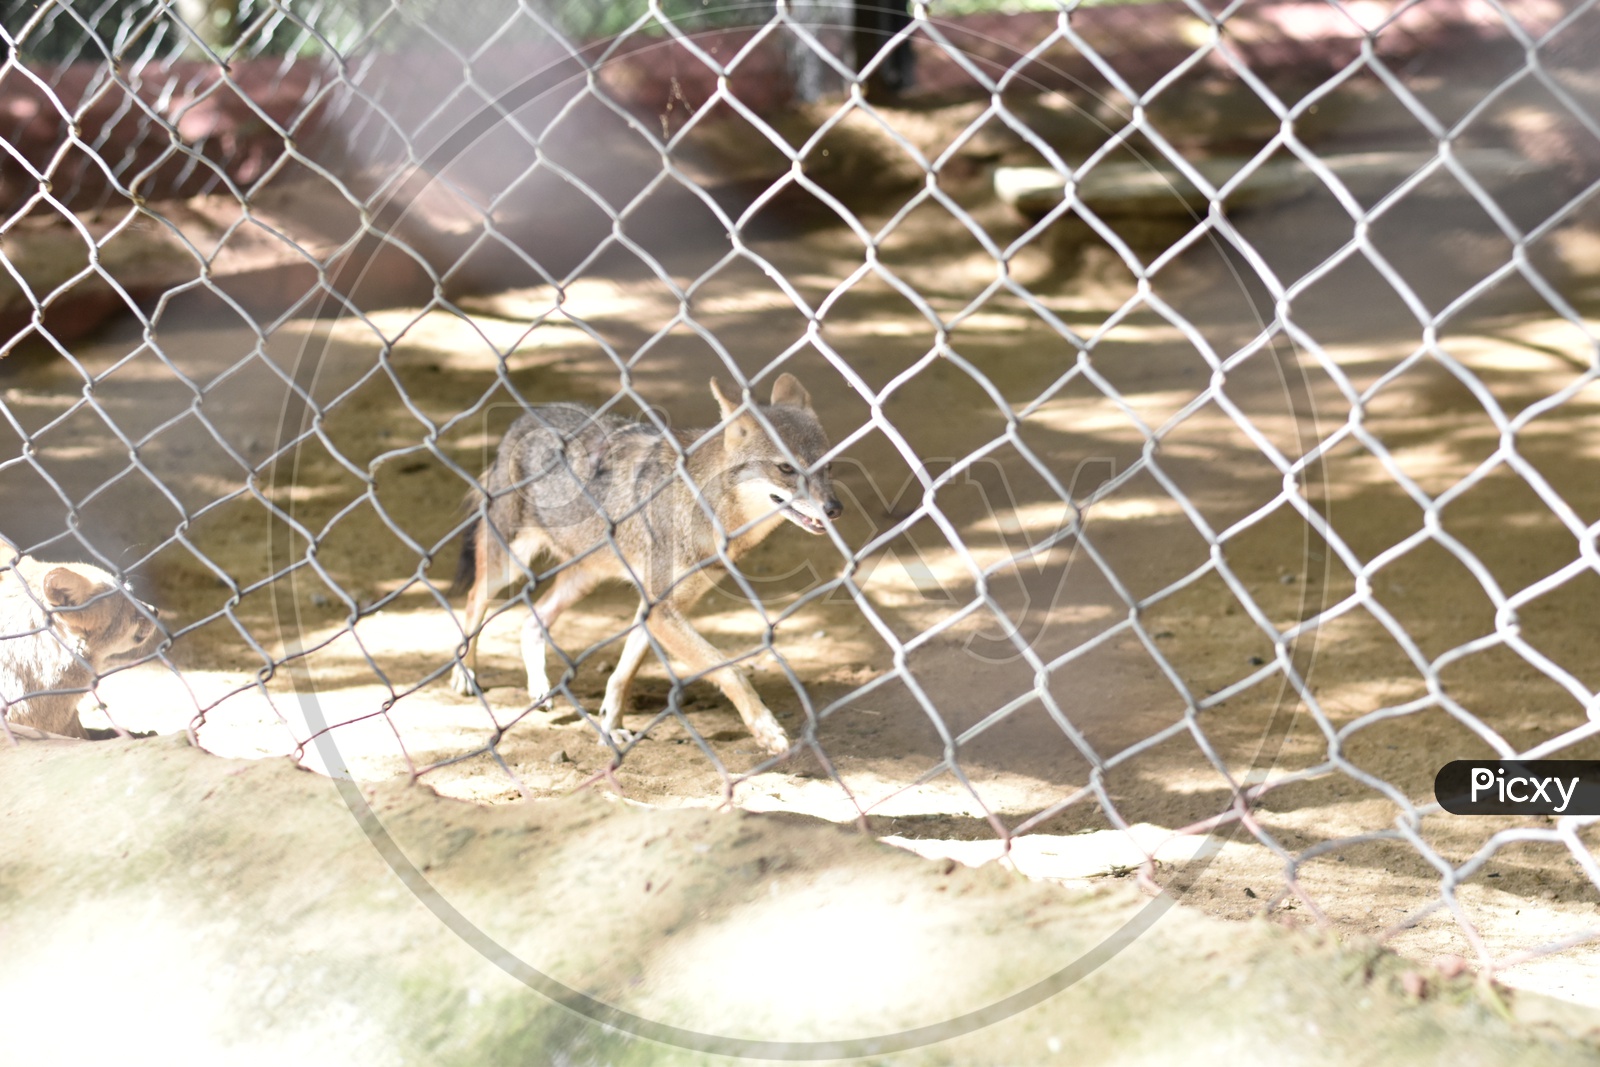 A Jackal behind bars in Zoo